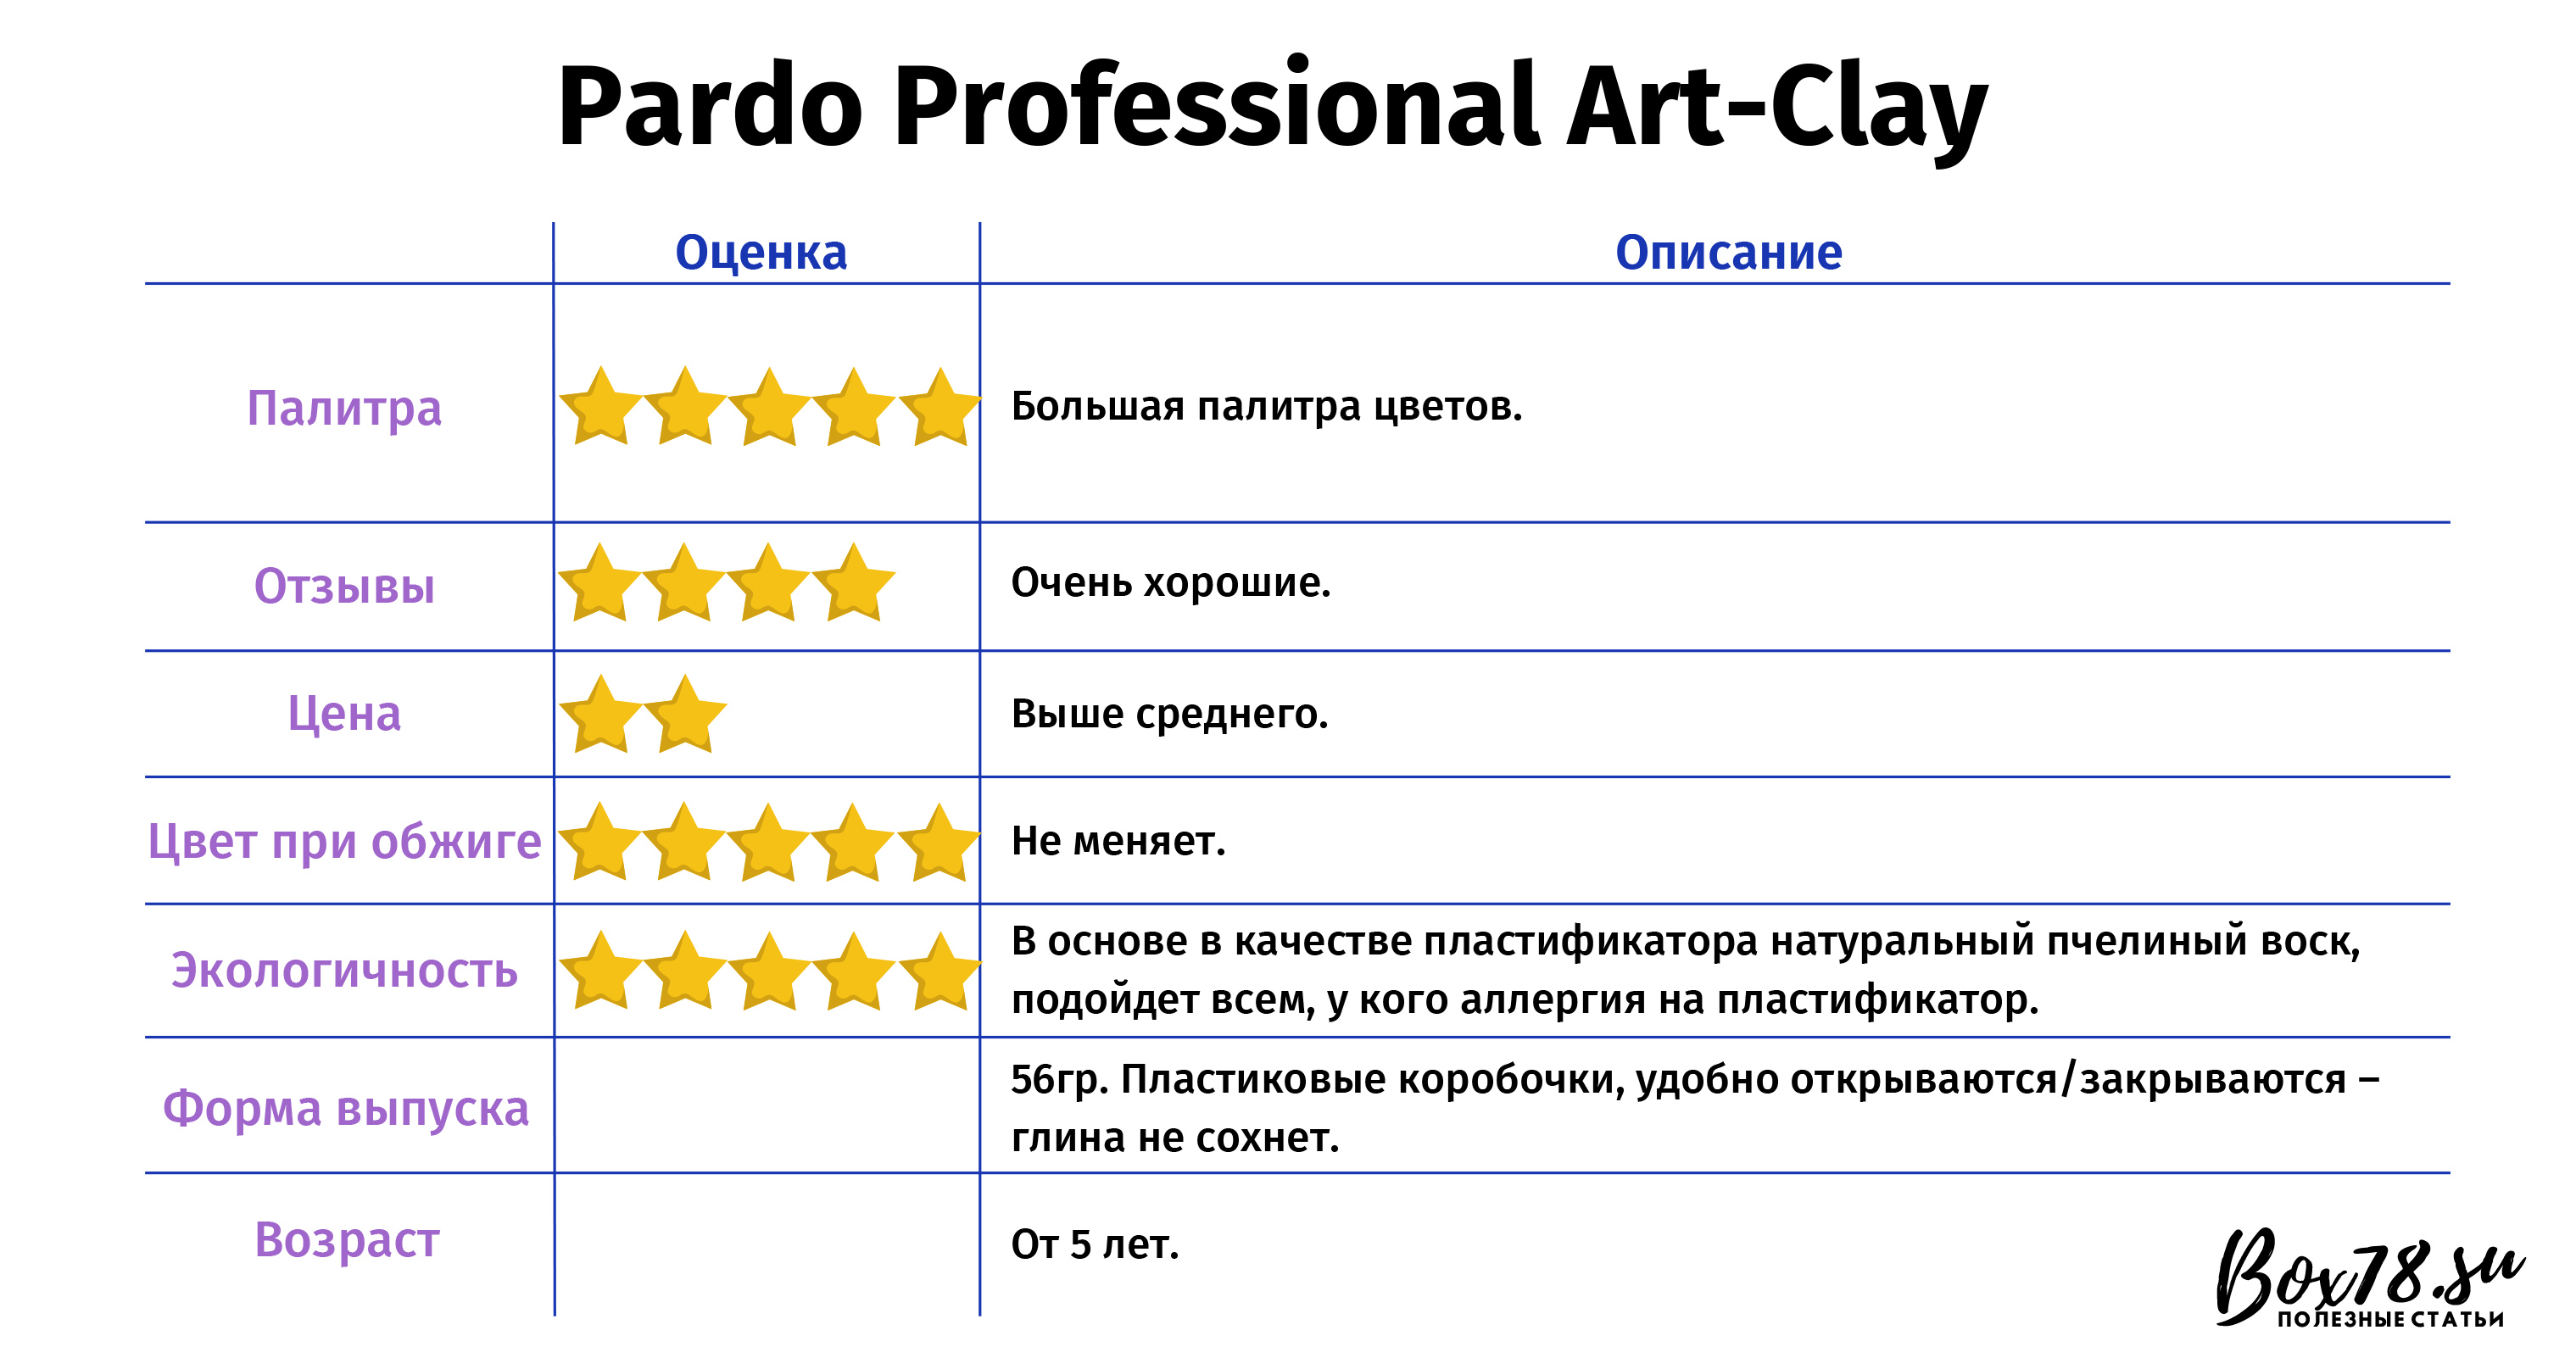 Pardo Professional Art-Clay.jpg